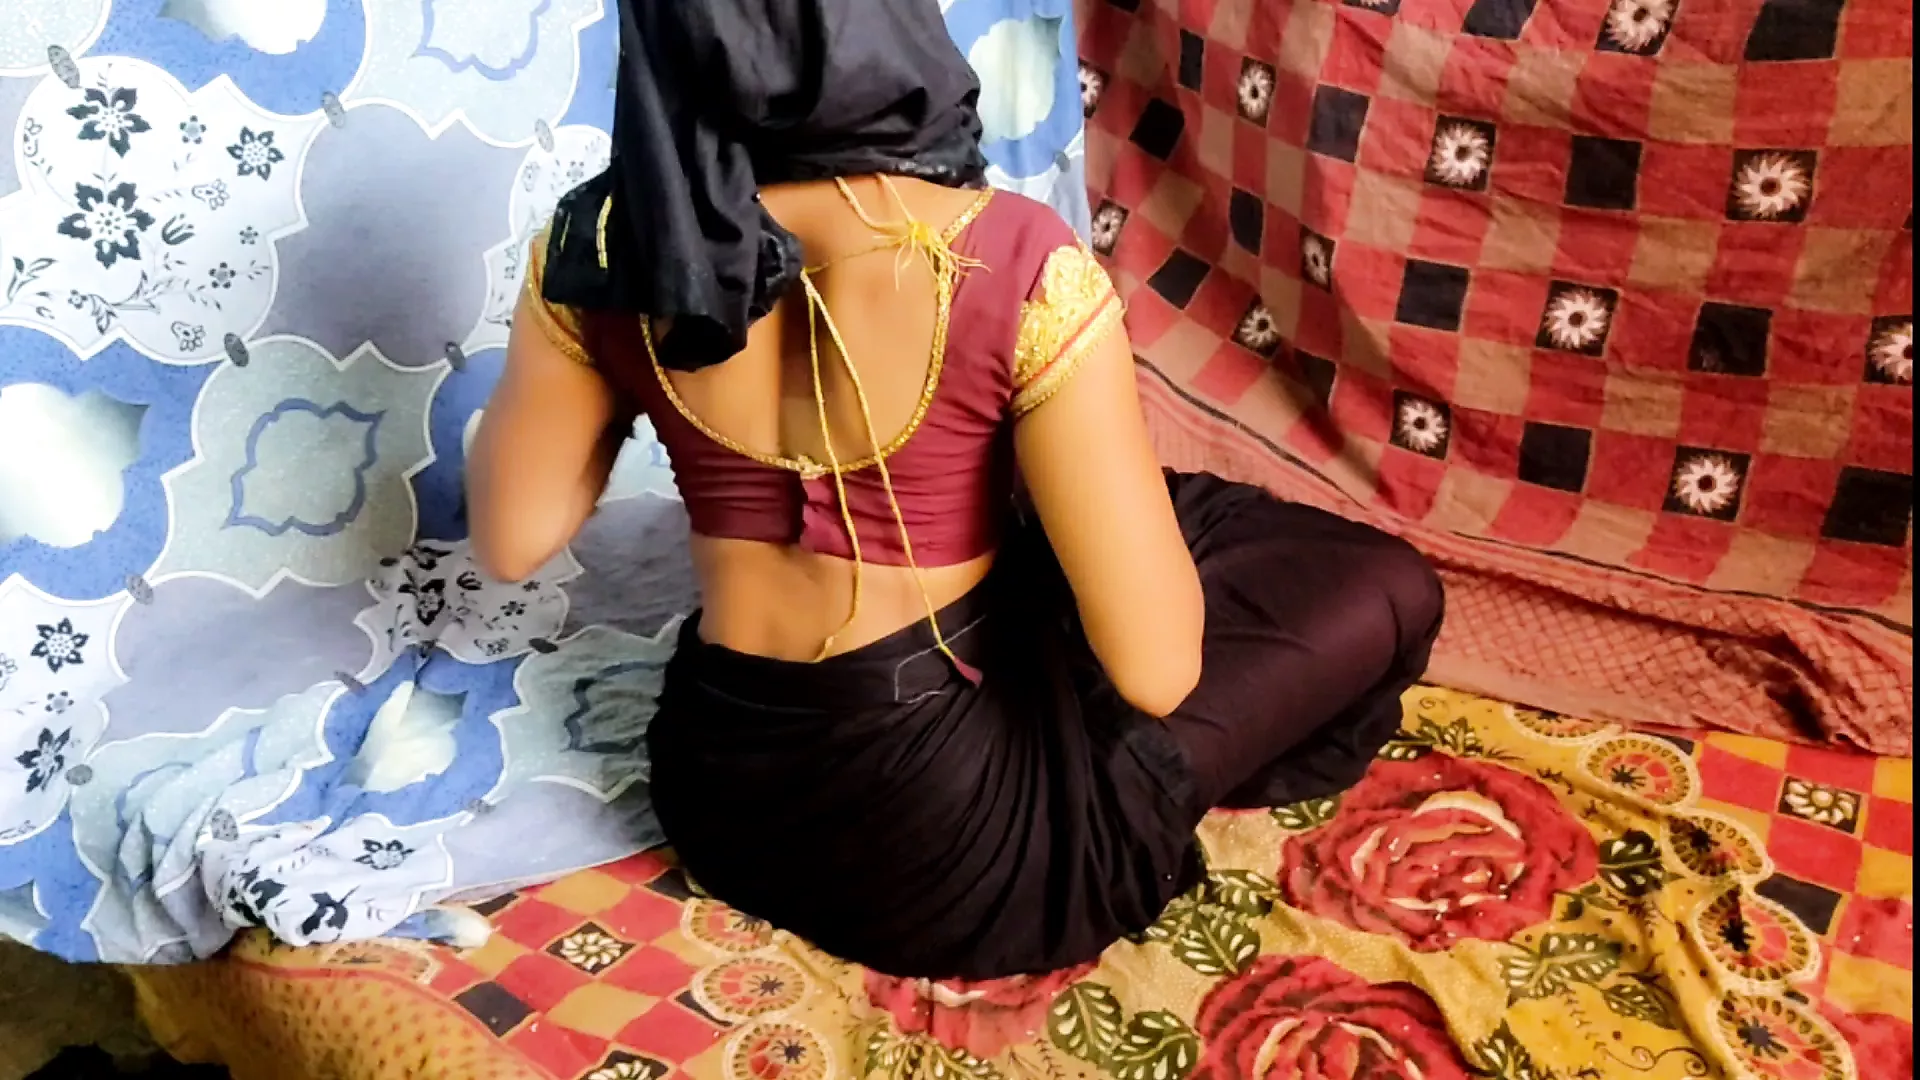 Honeymoon Chudai Audio Vedio - Newly Marriage Couple Honeymoon Sex Video in Clear Hindi Audio | xHamster